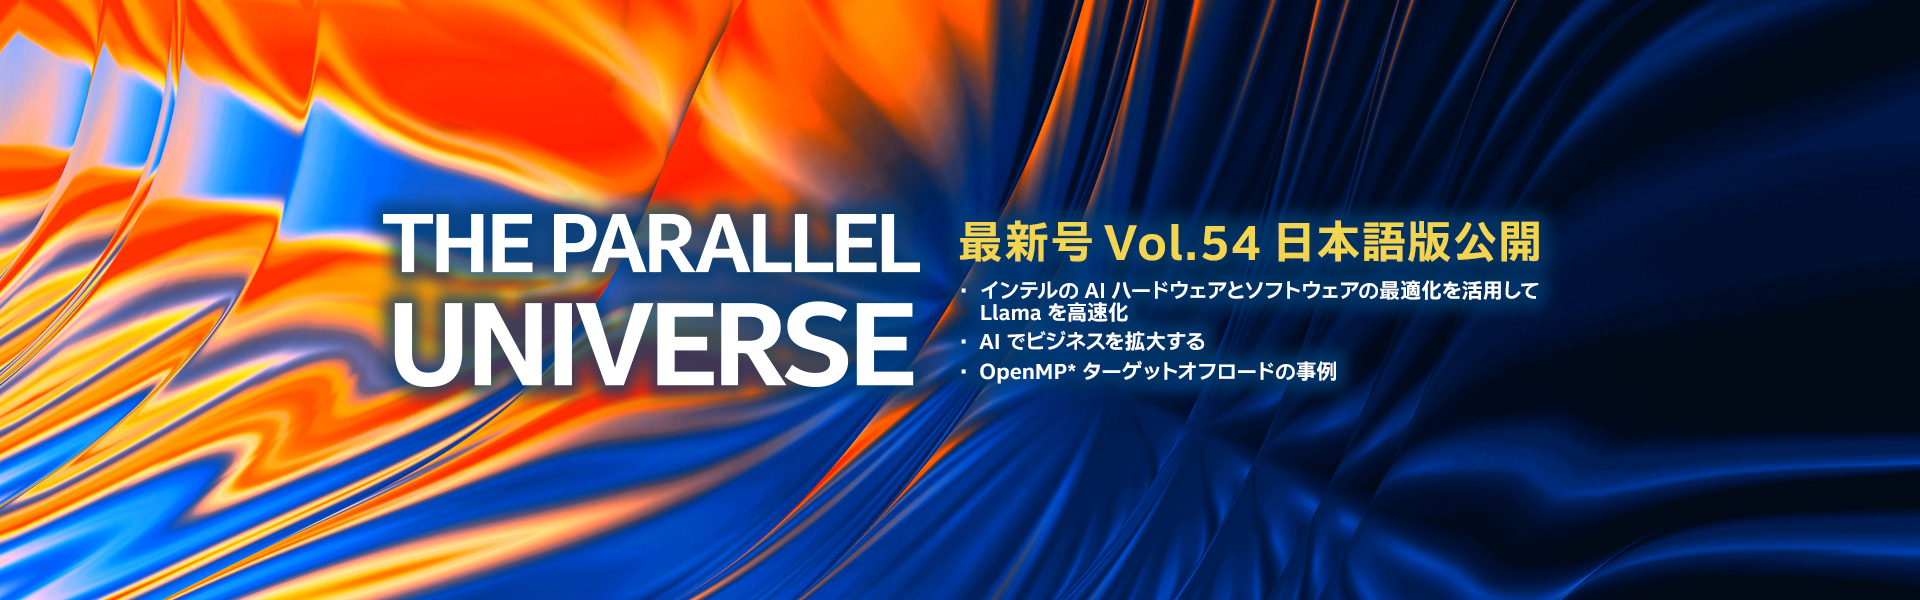 The Parallel Universe 最新号 Vol.54 日本語版公開中